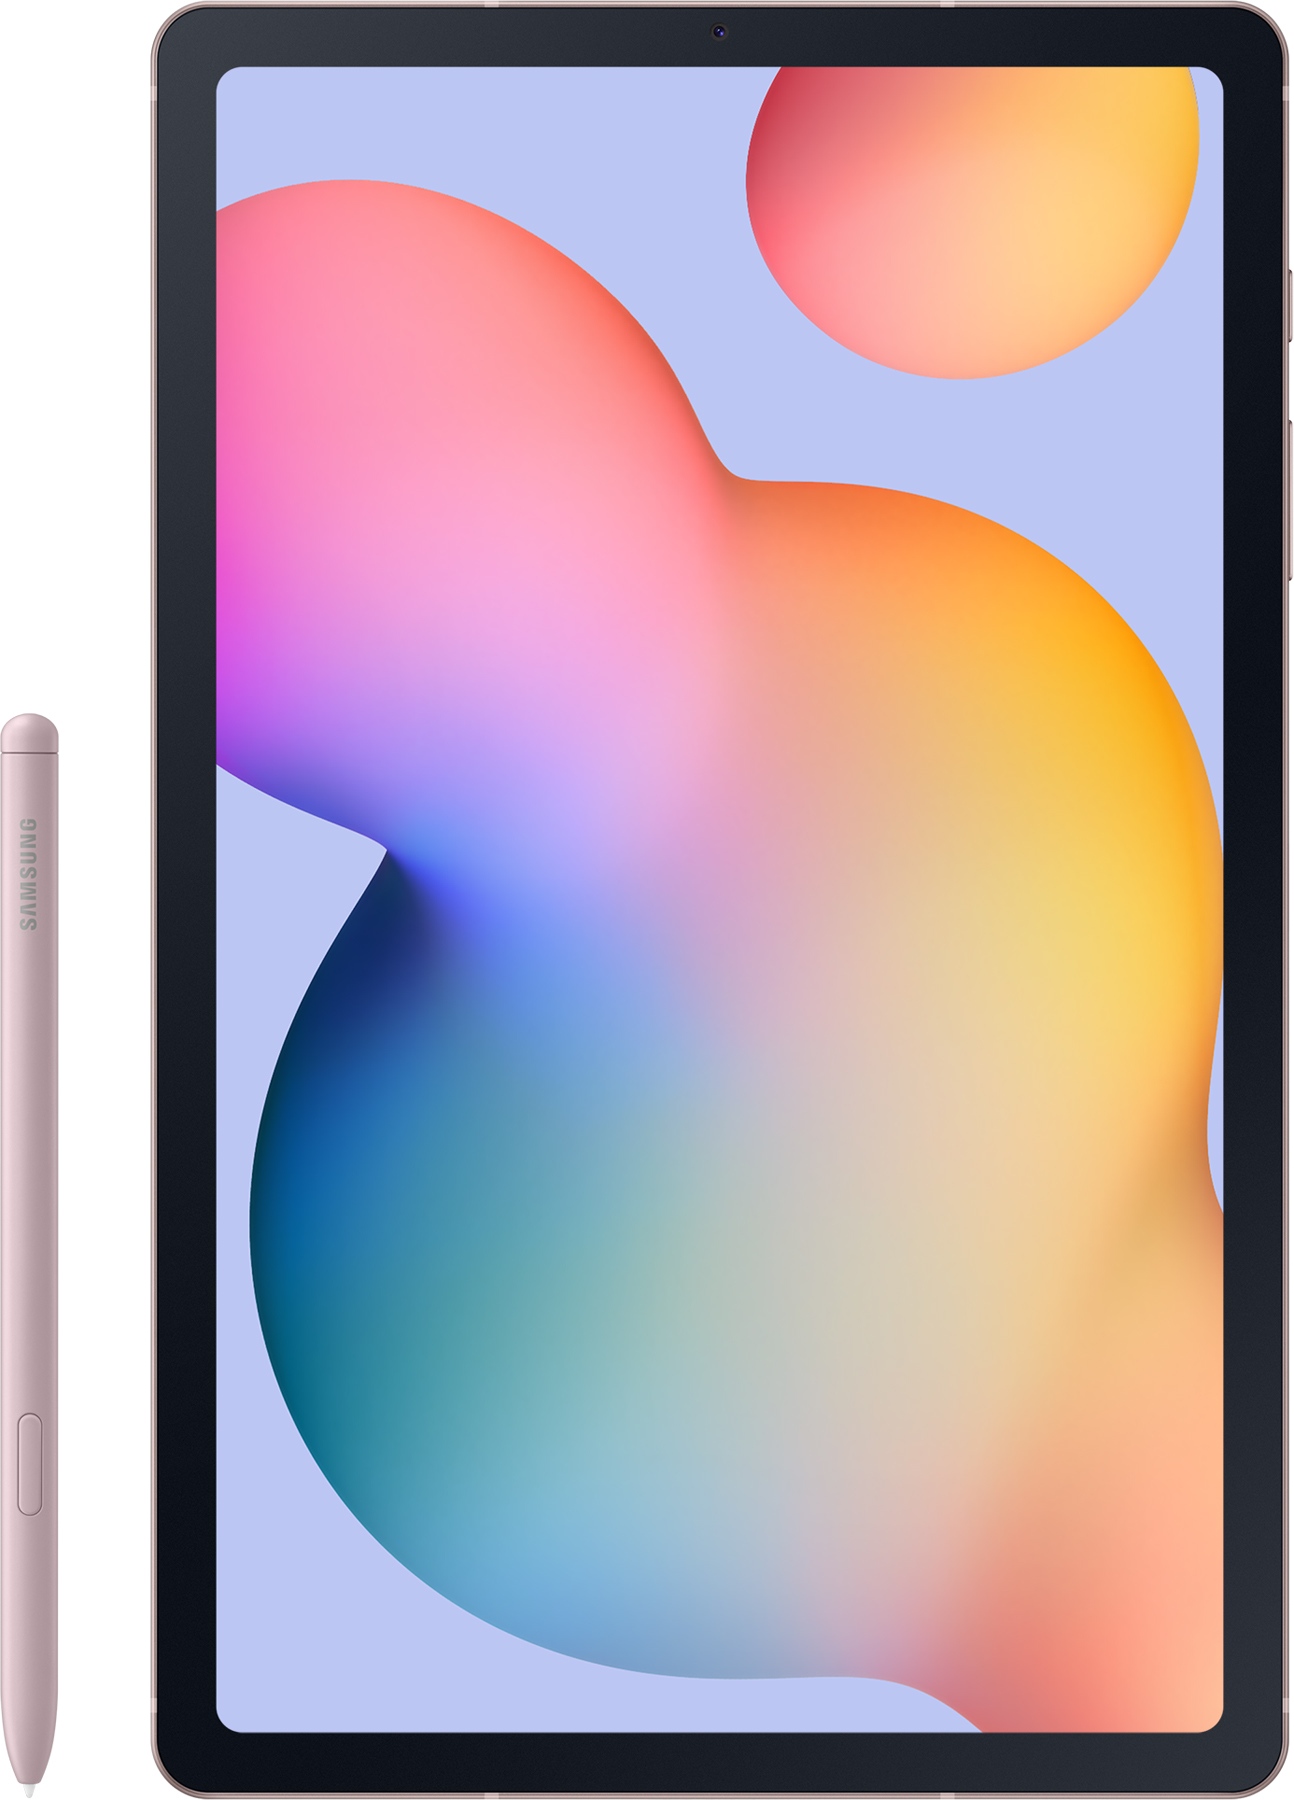 Акция на Планшет SAMSUNG Galaxy Tab S6 Lite 10.4 LTE 4/64GB Pink (SM-P615NZIASEK) от Eldorado